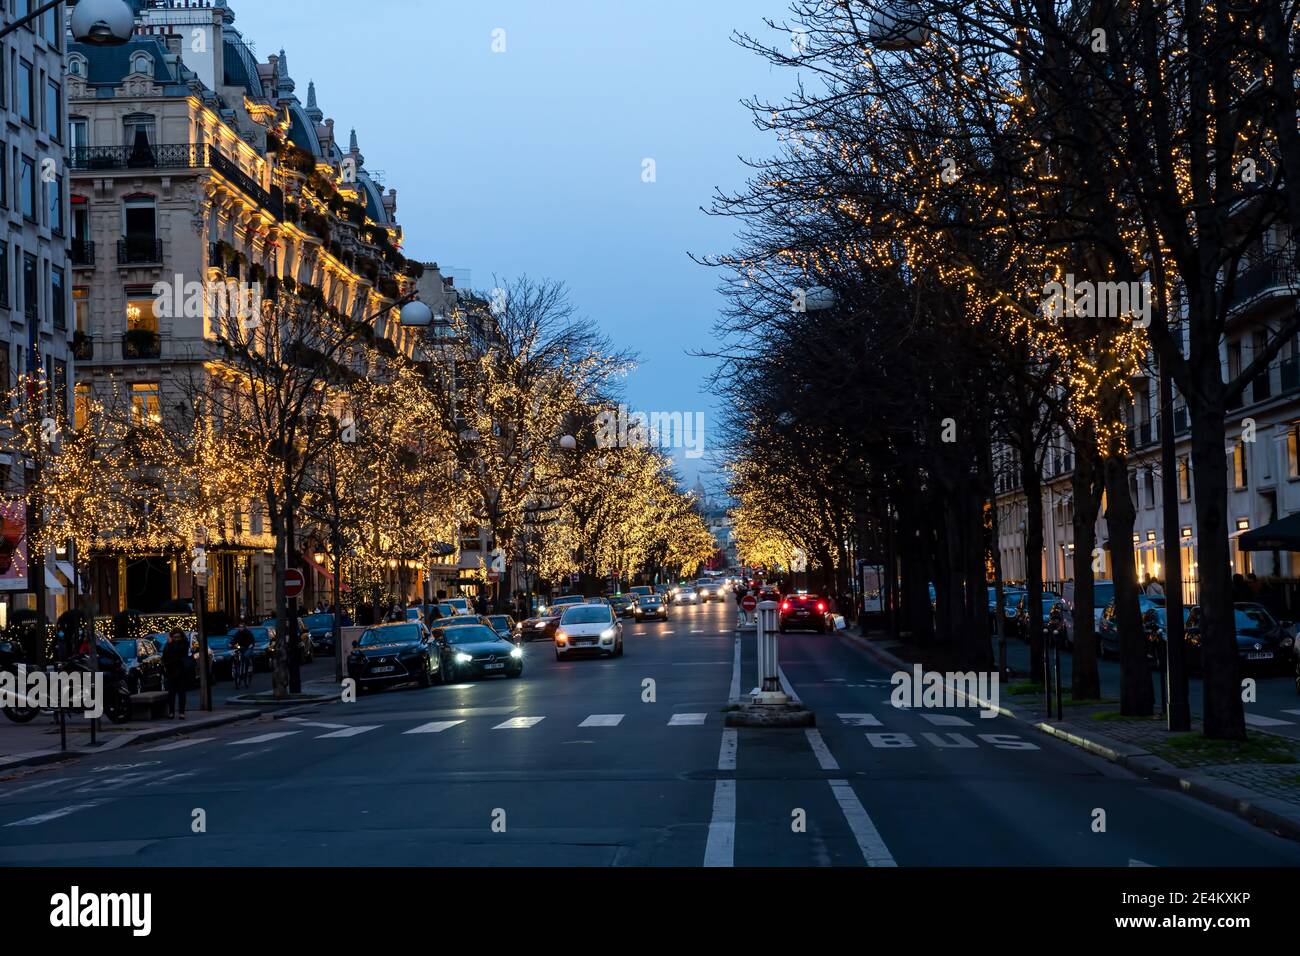 France : Luxury giants covet strategic Avenue Montaigne side streets